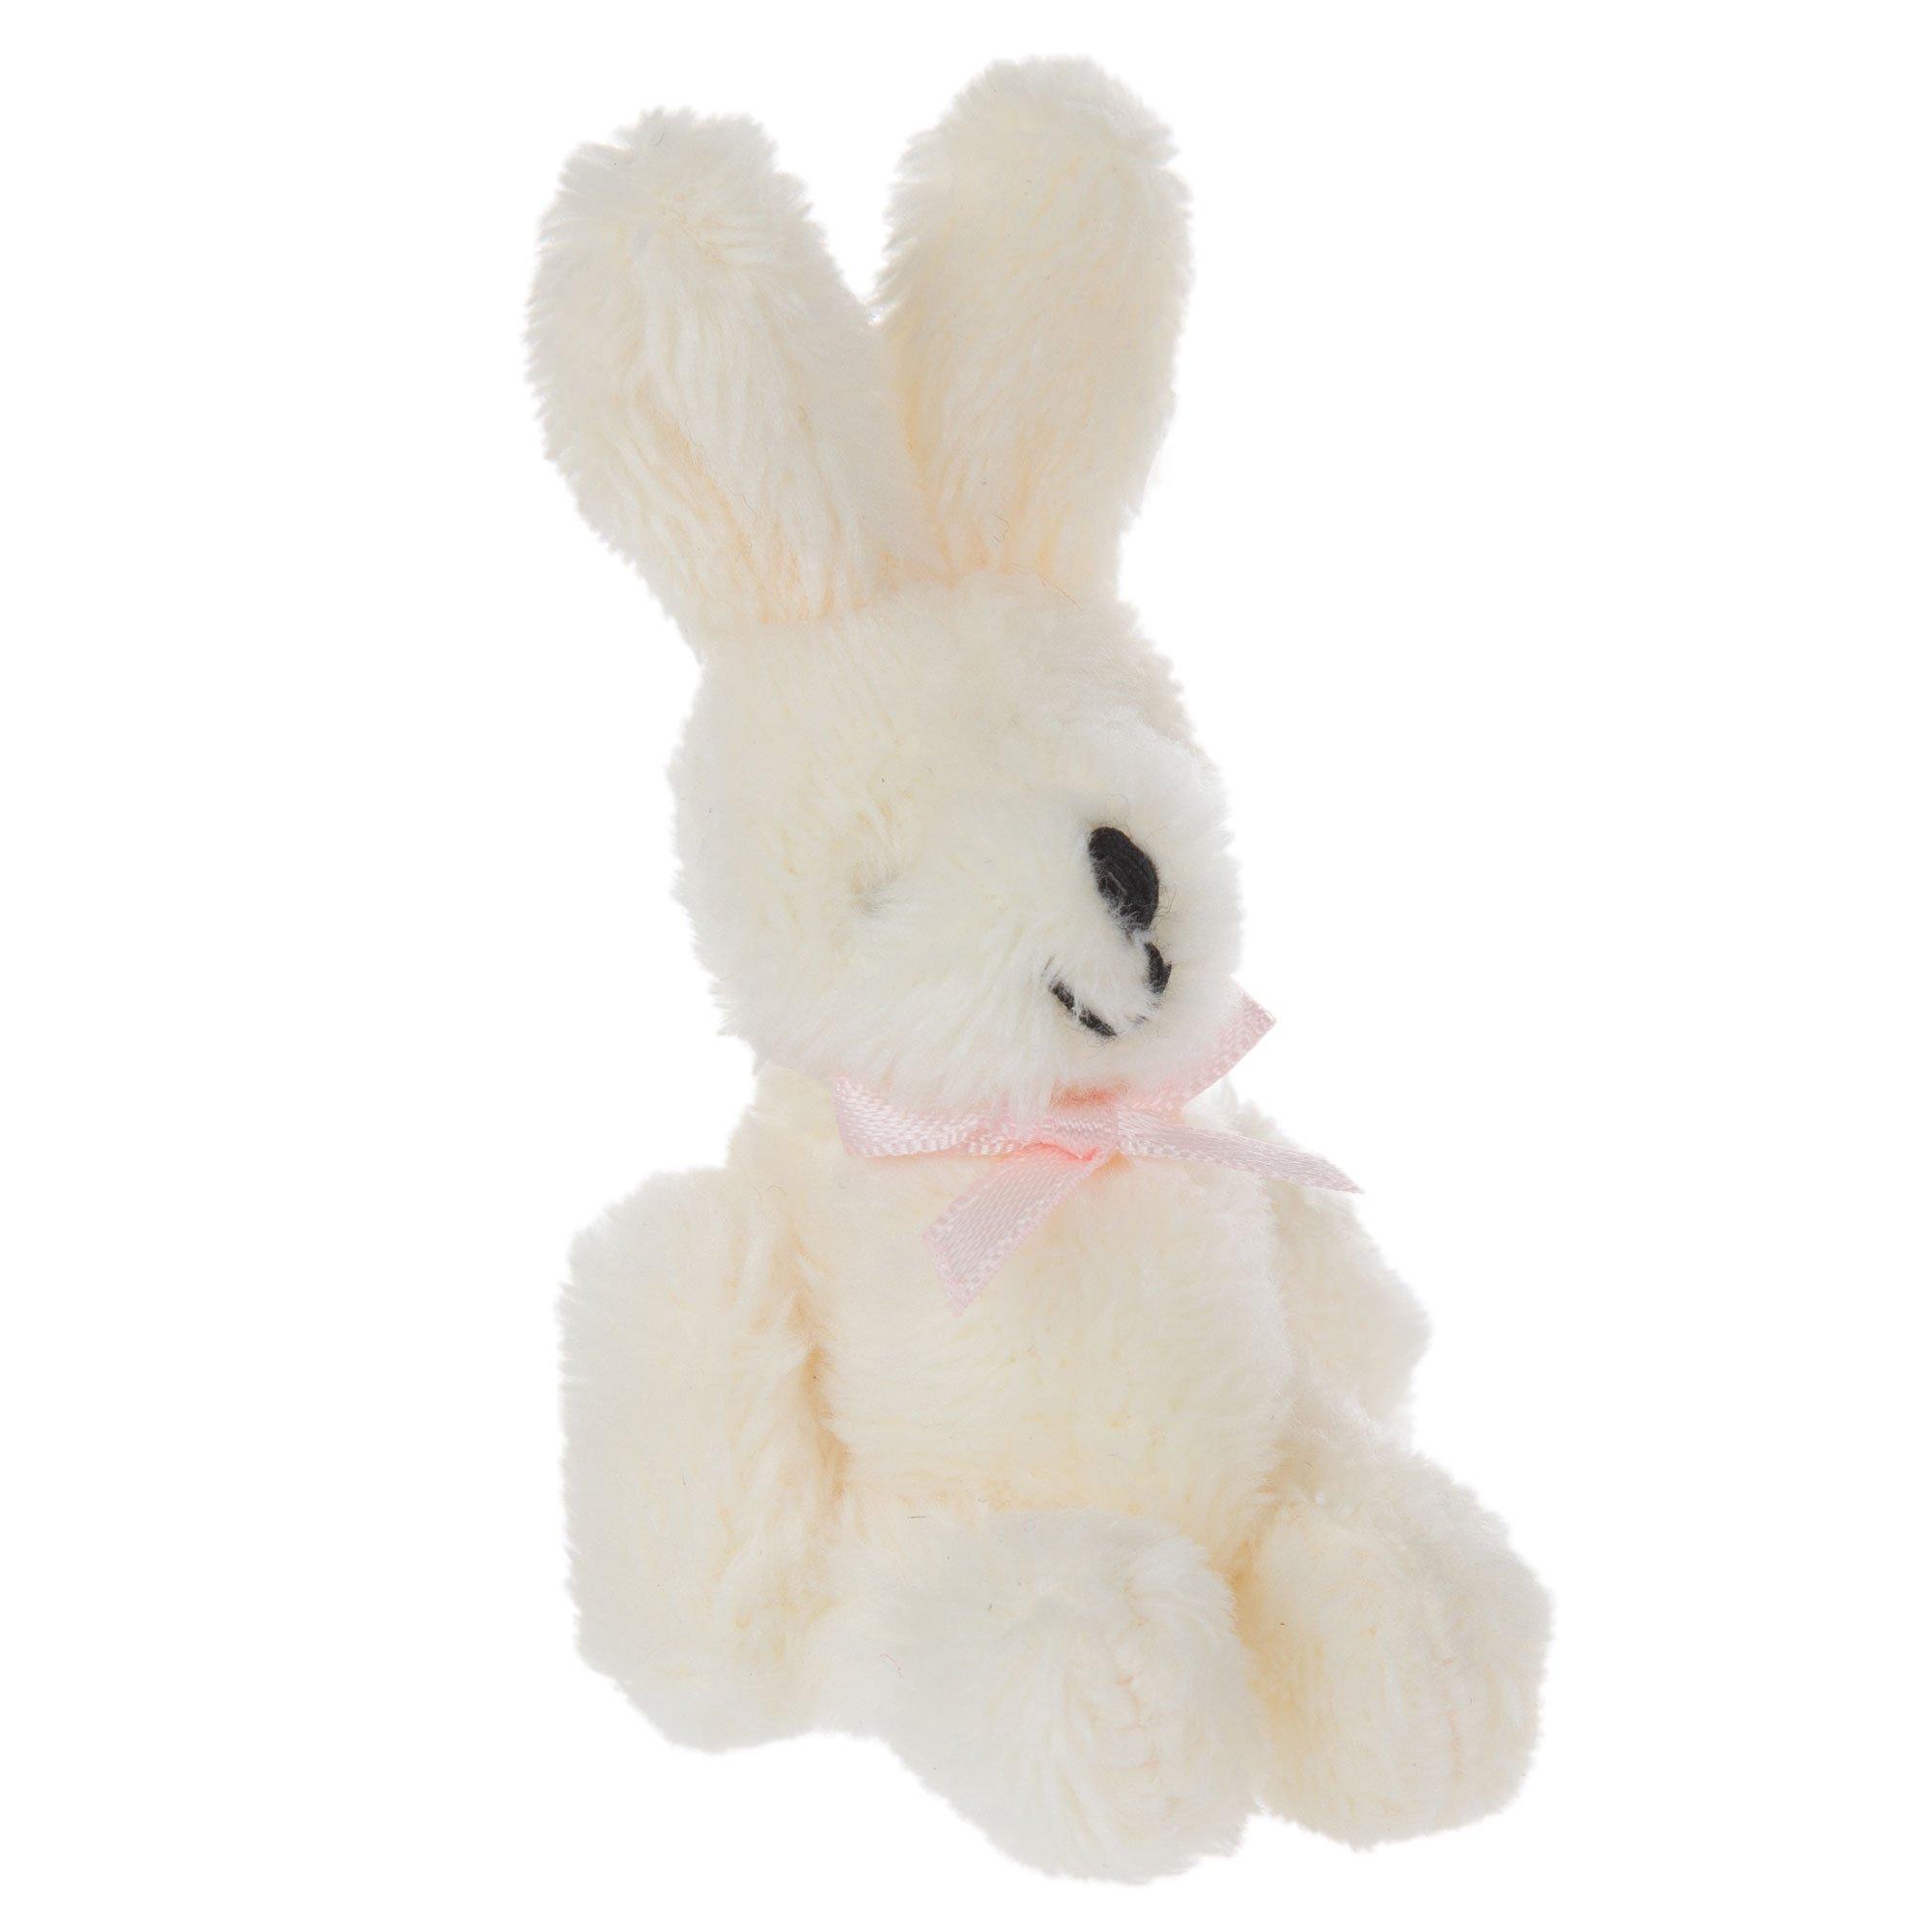 Dollhouse Miniature Bunny Rabbits Set of 3 1:12 Scale Pet Black